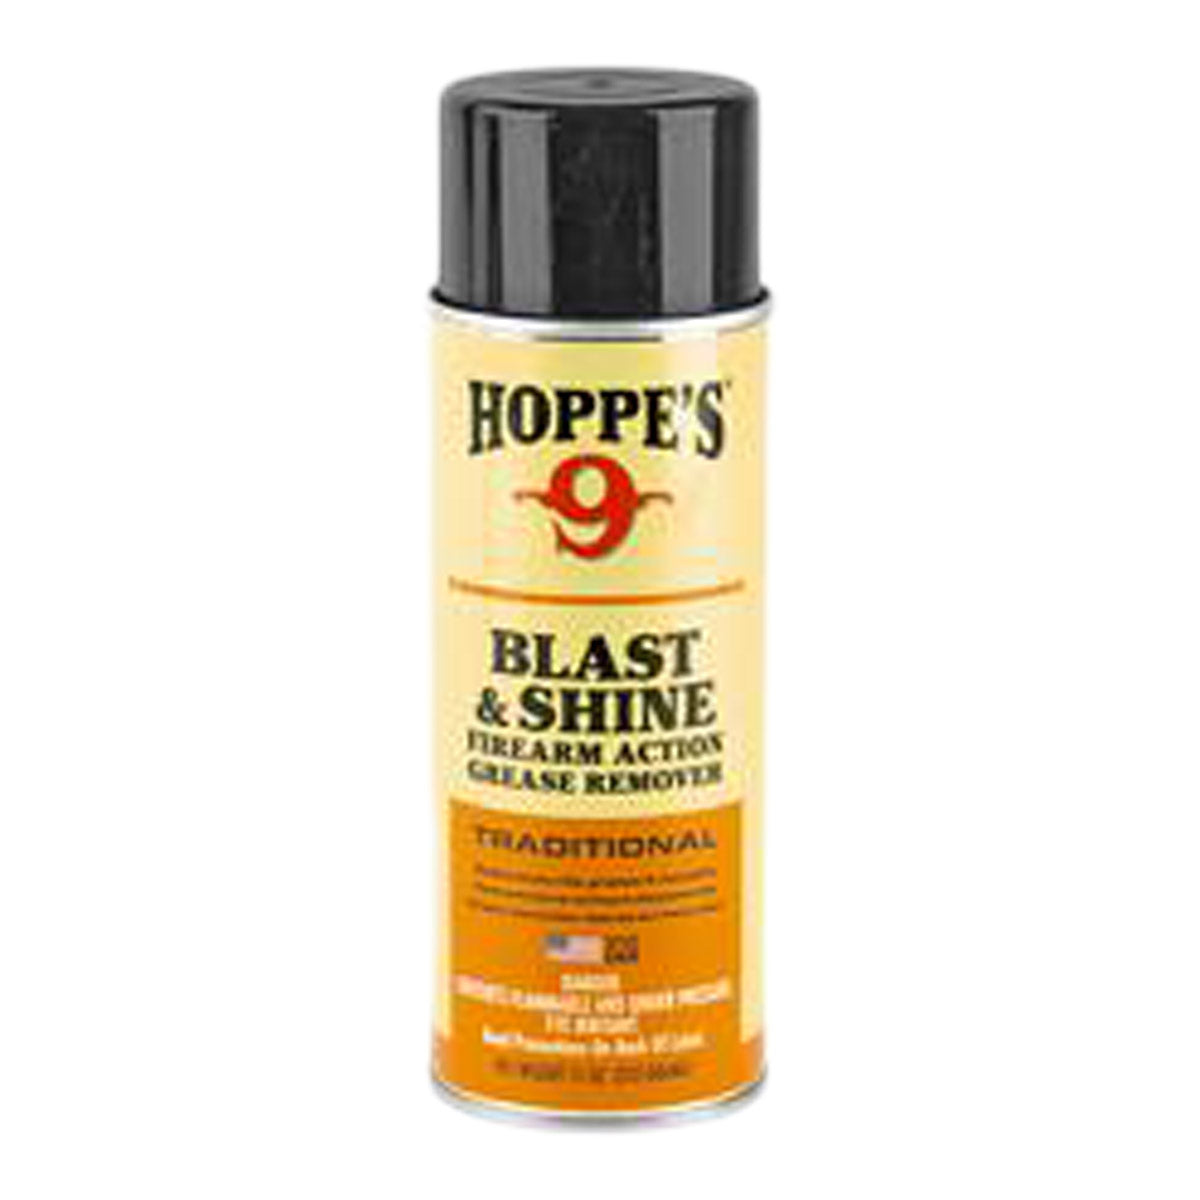 Hoppe's Blast & Shine Firearm Cleaner